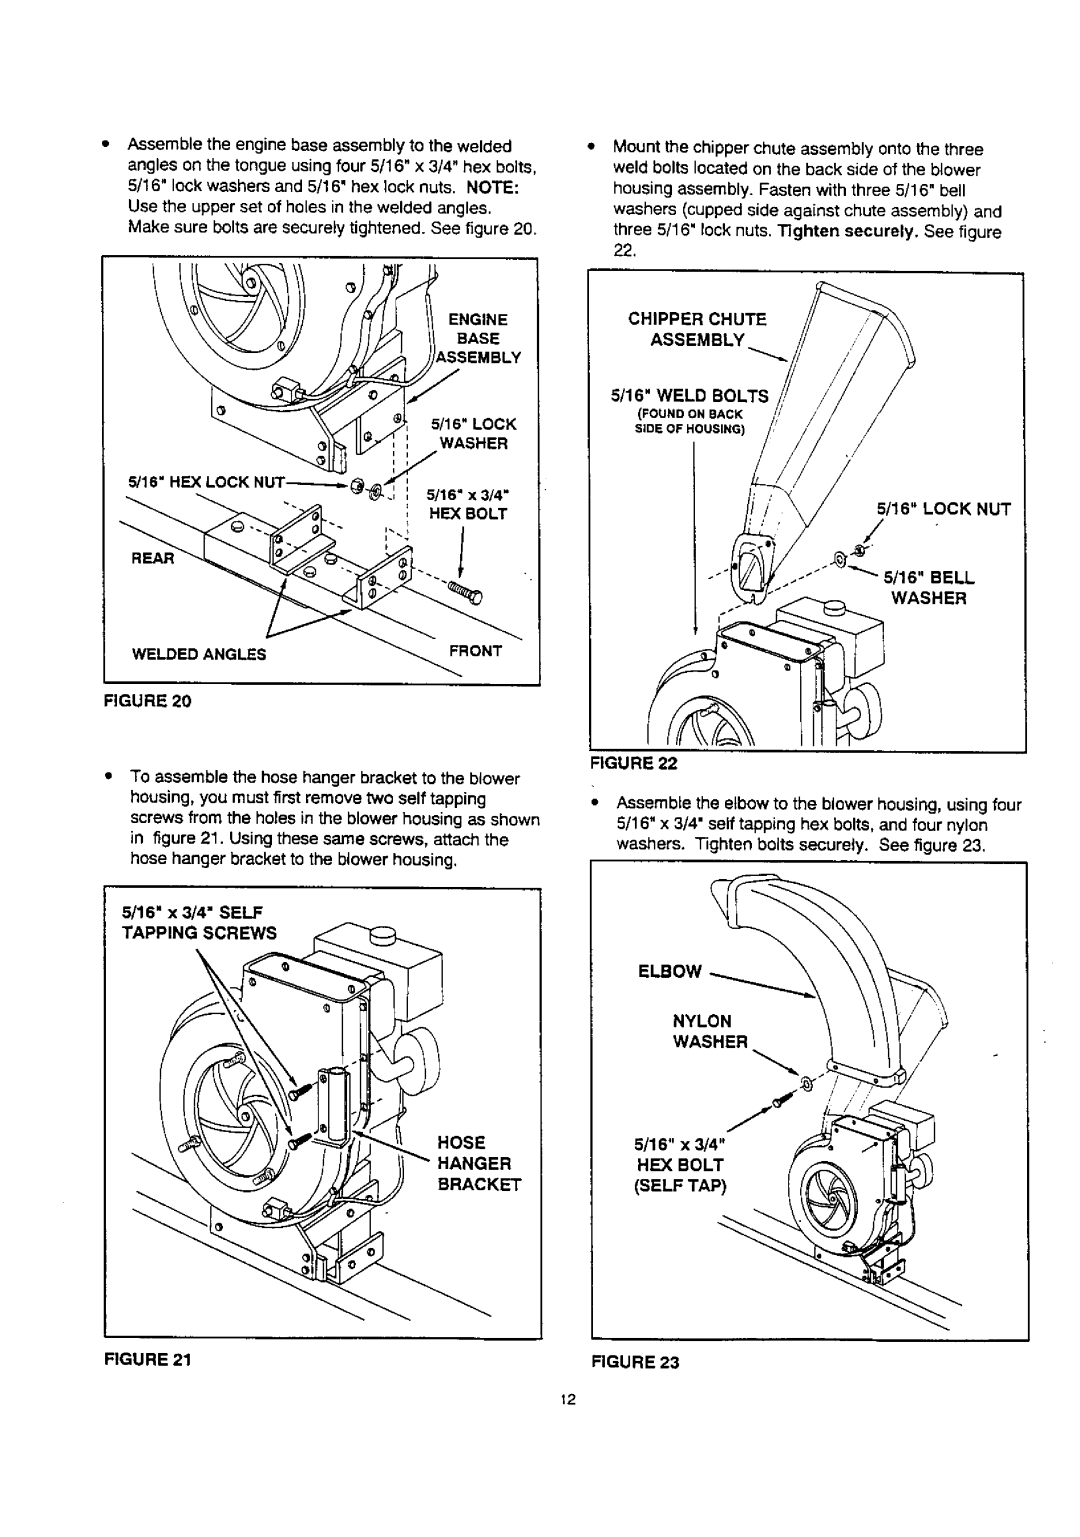 Craftsman 486.24515 owner manual Hexbolt, Bell Washer 